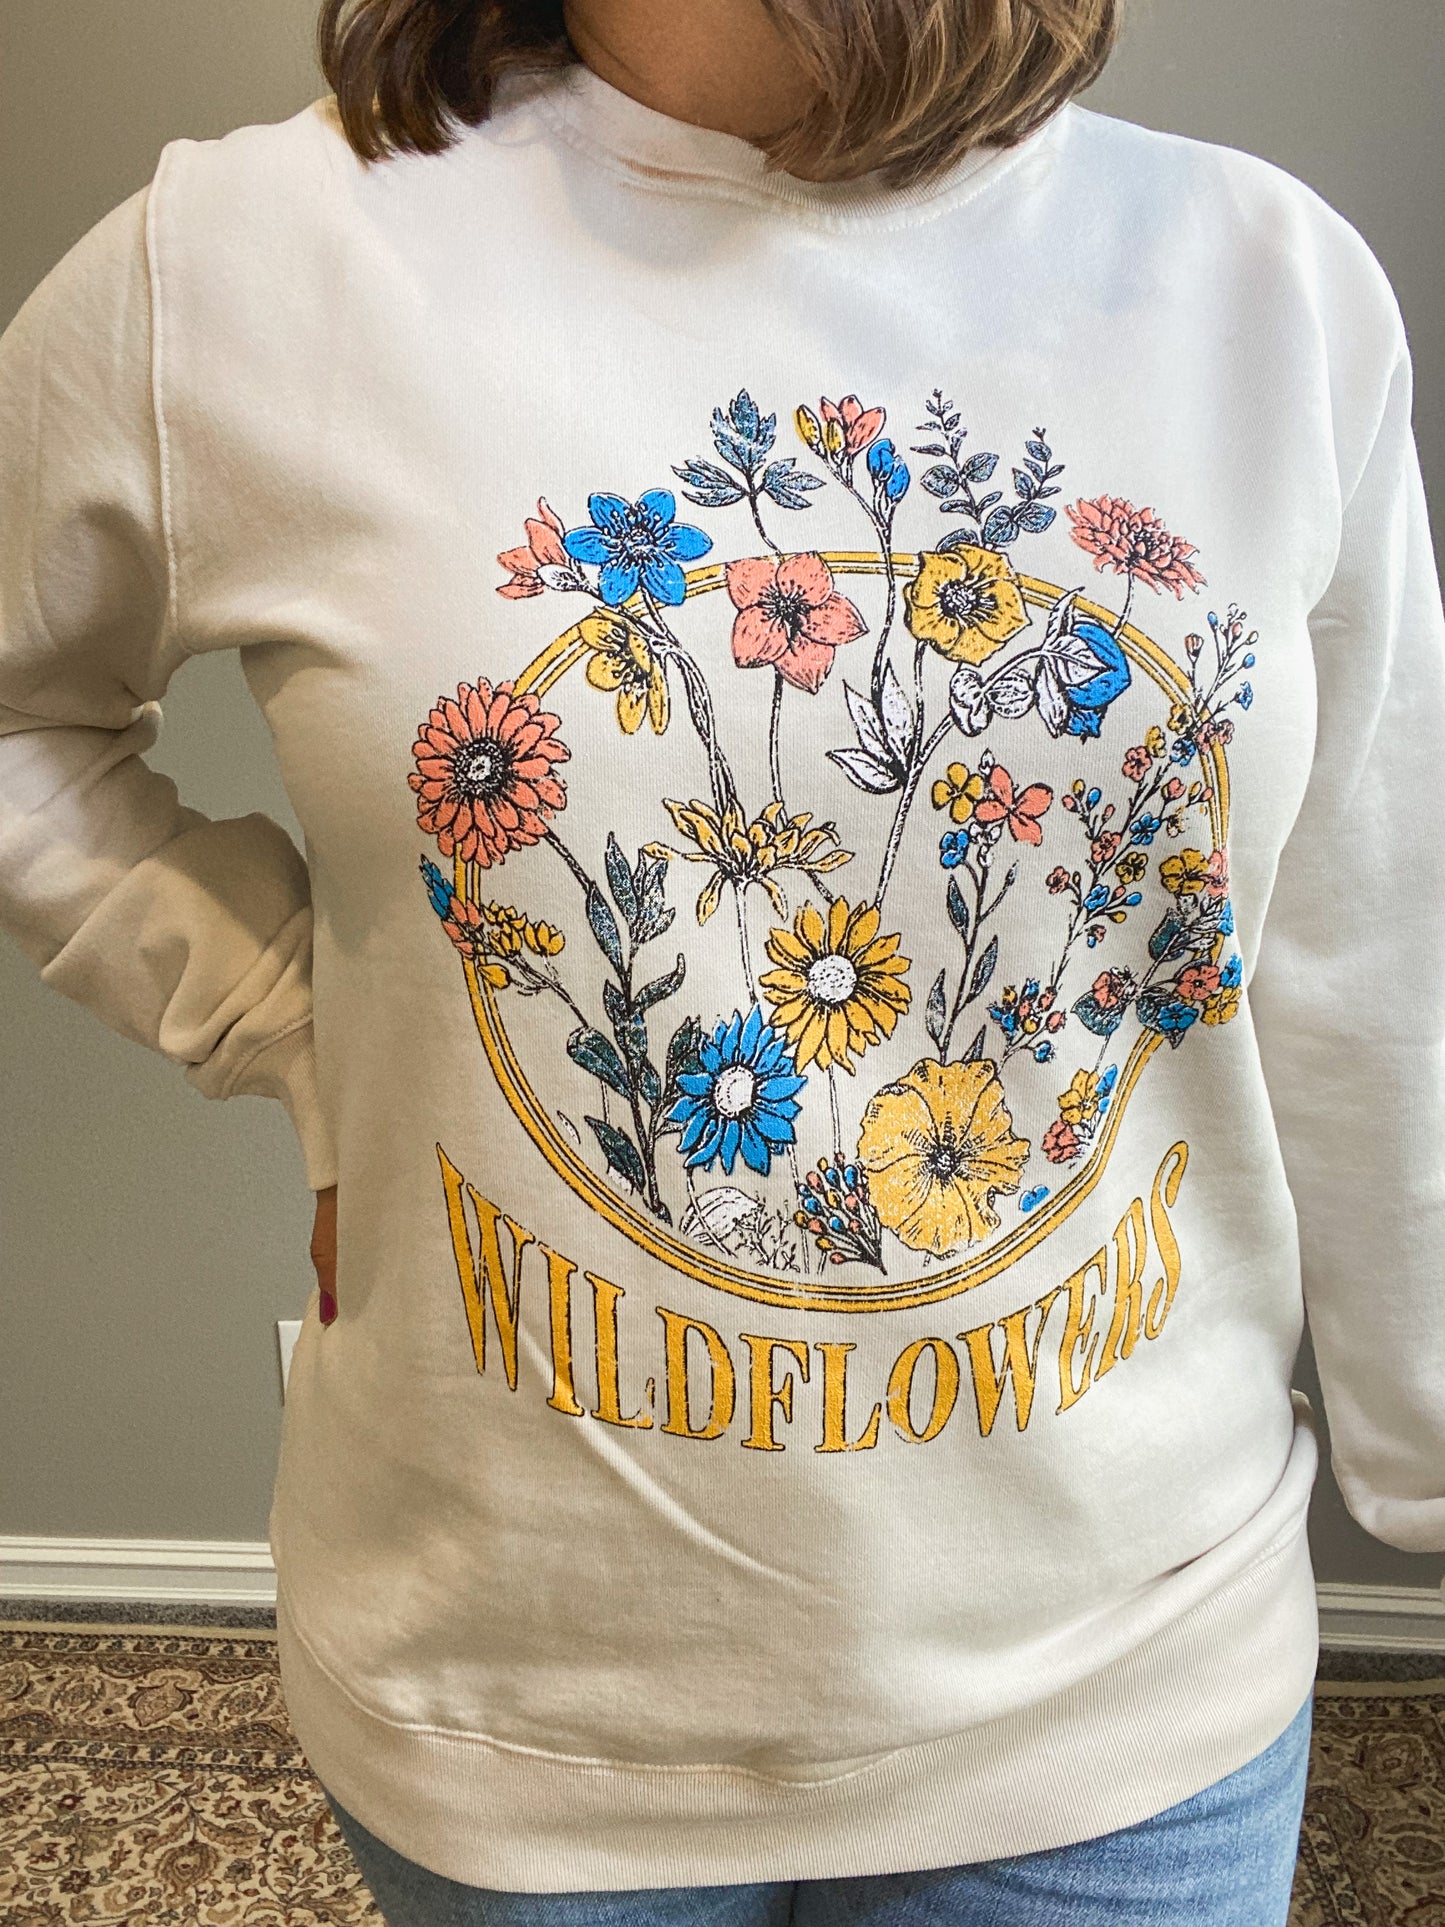 Wildflowers French Terry Sweatshirt